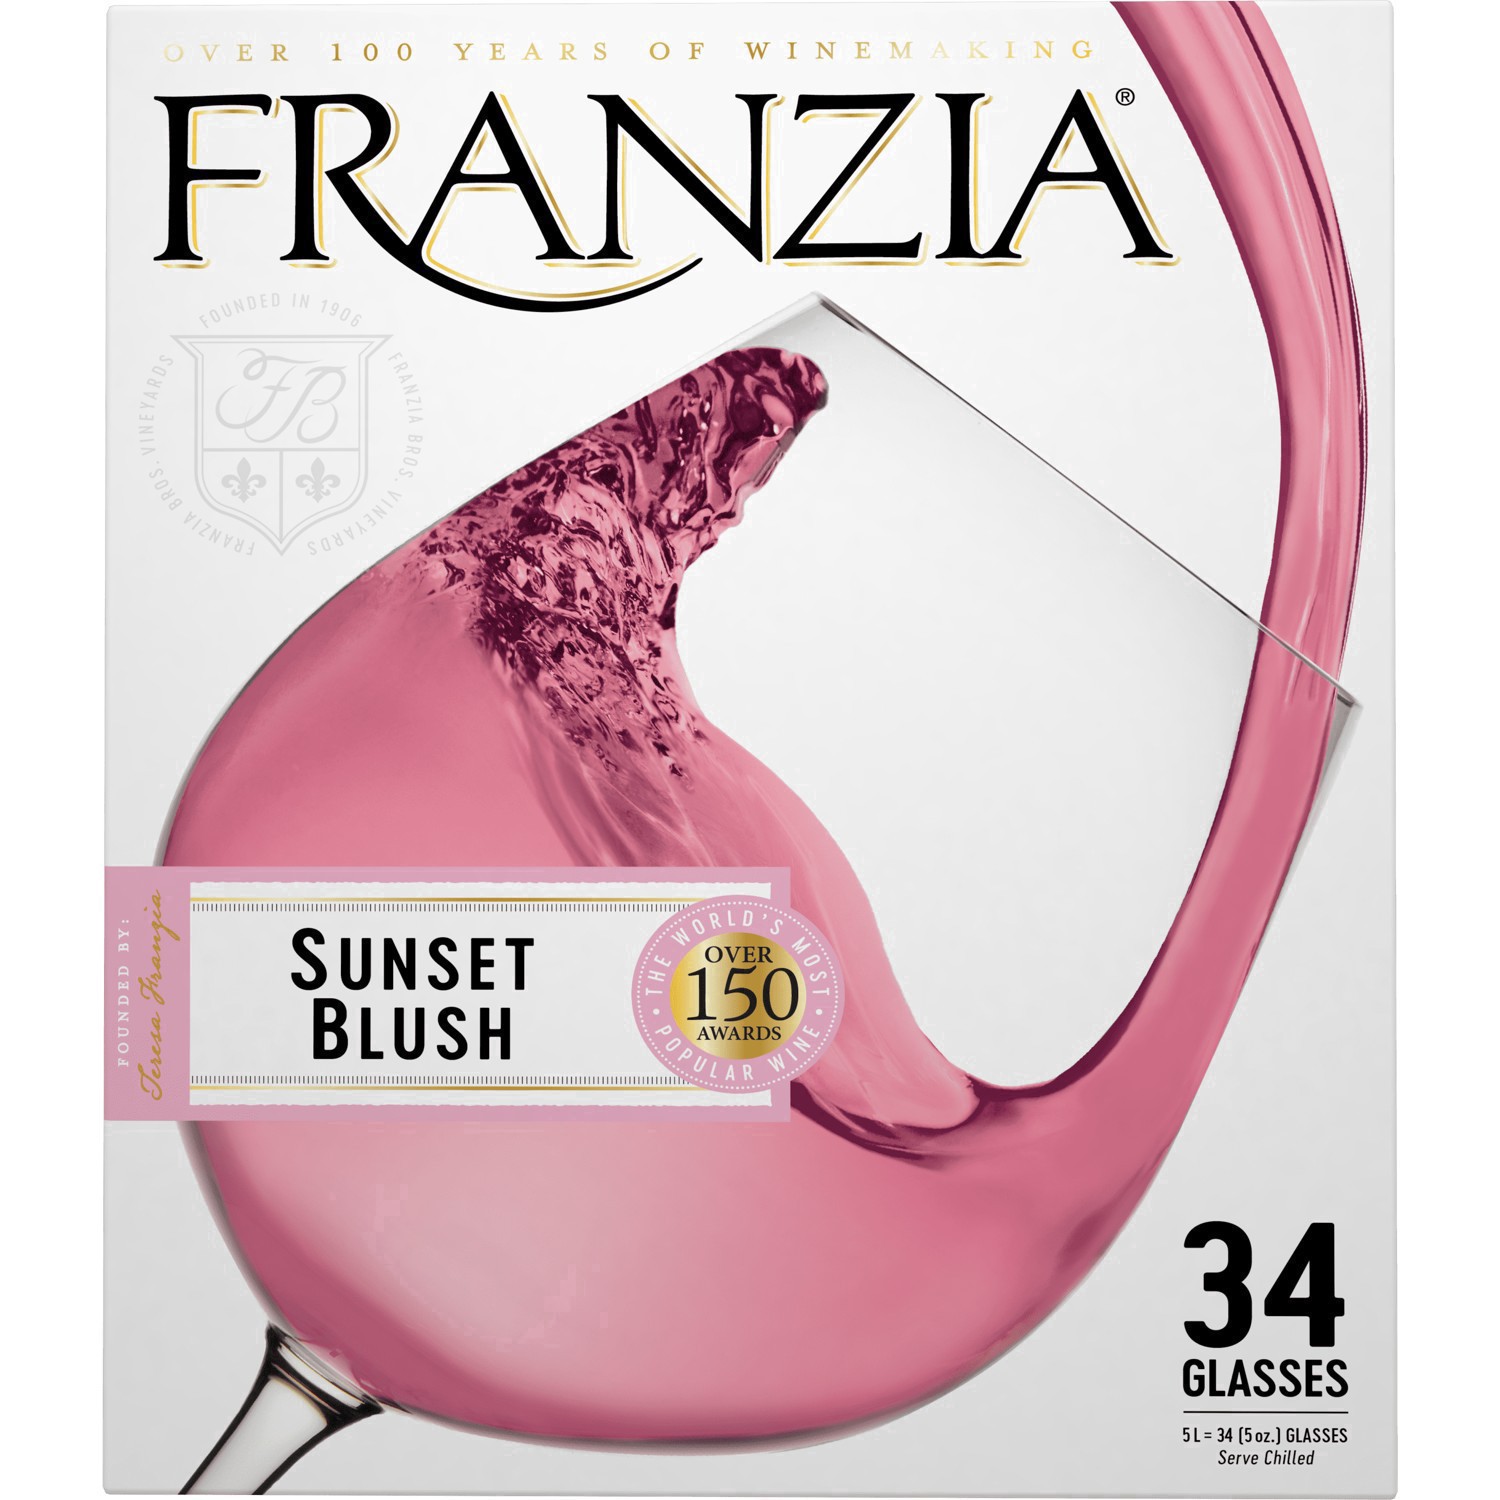 slide 26 of 27, Franzia Sunset Blush Pink Wine, 5 liter box